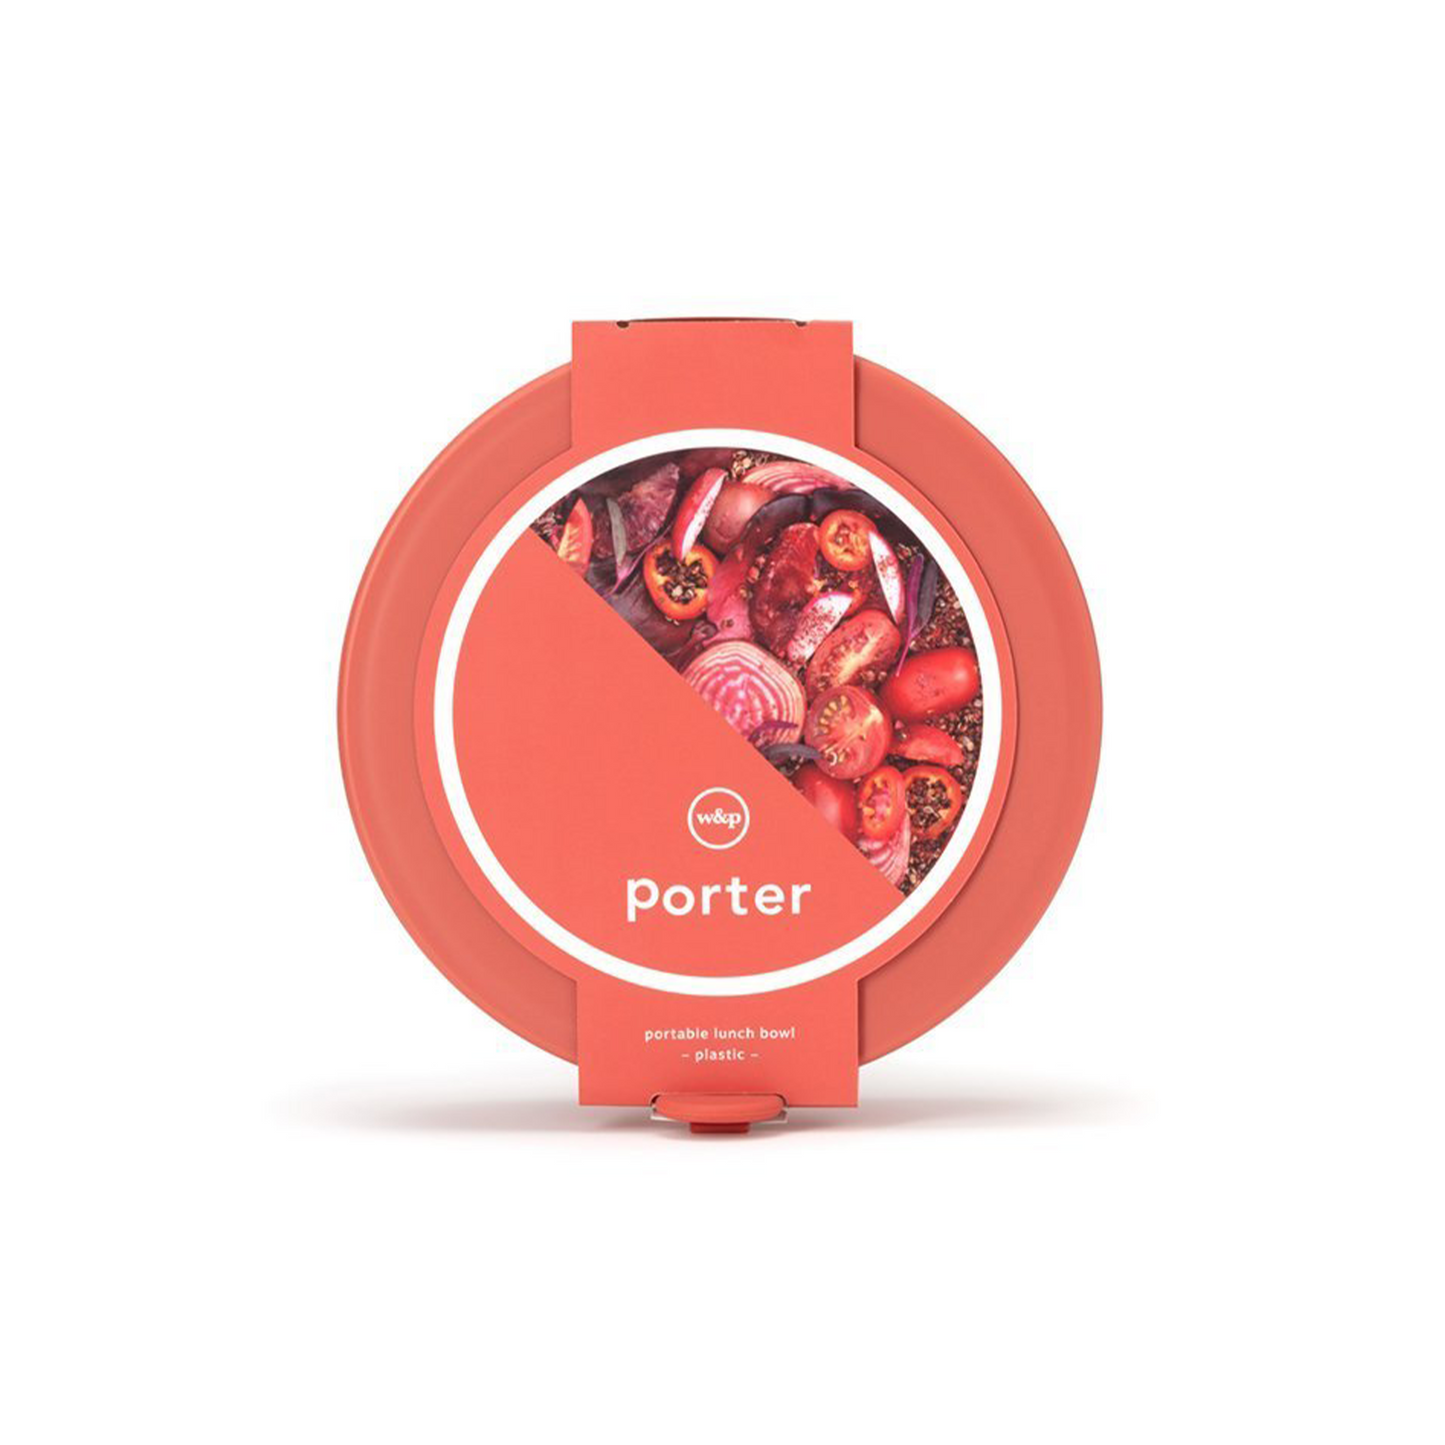 W&P Porter Plastic Portable Lunch Bowl